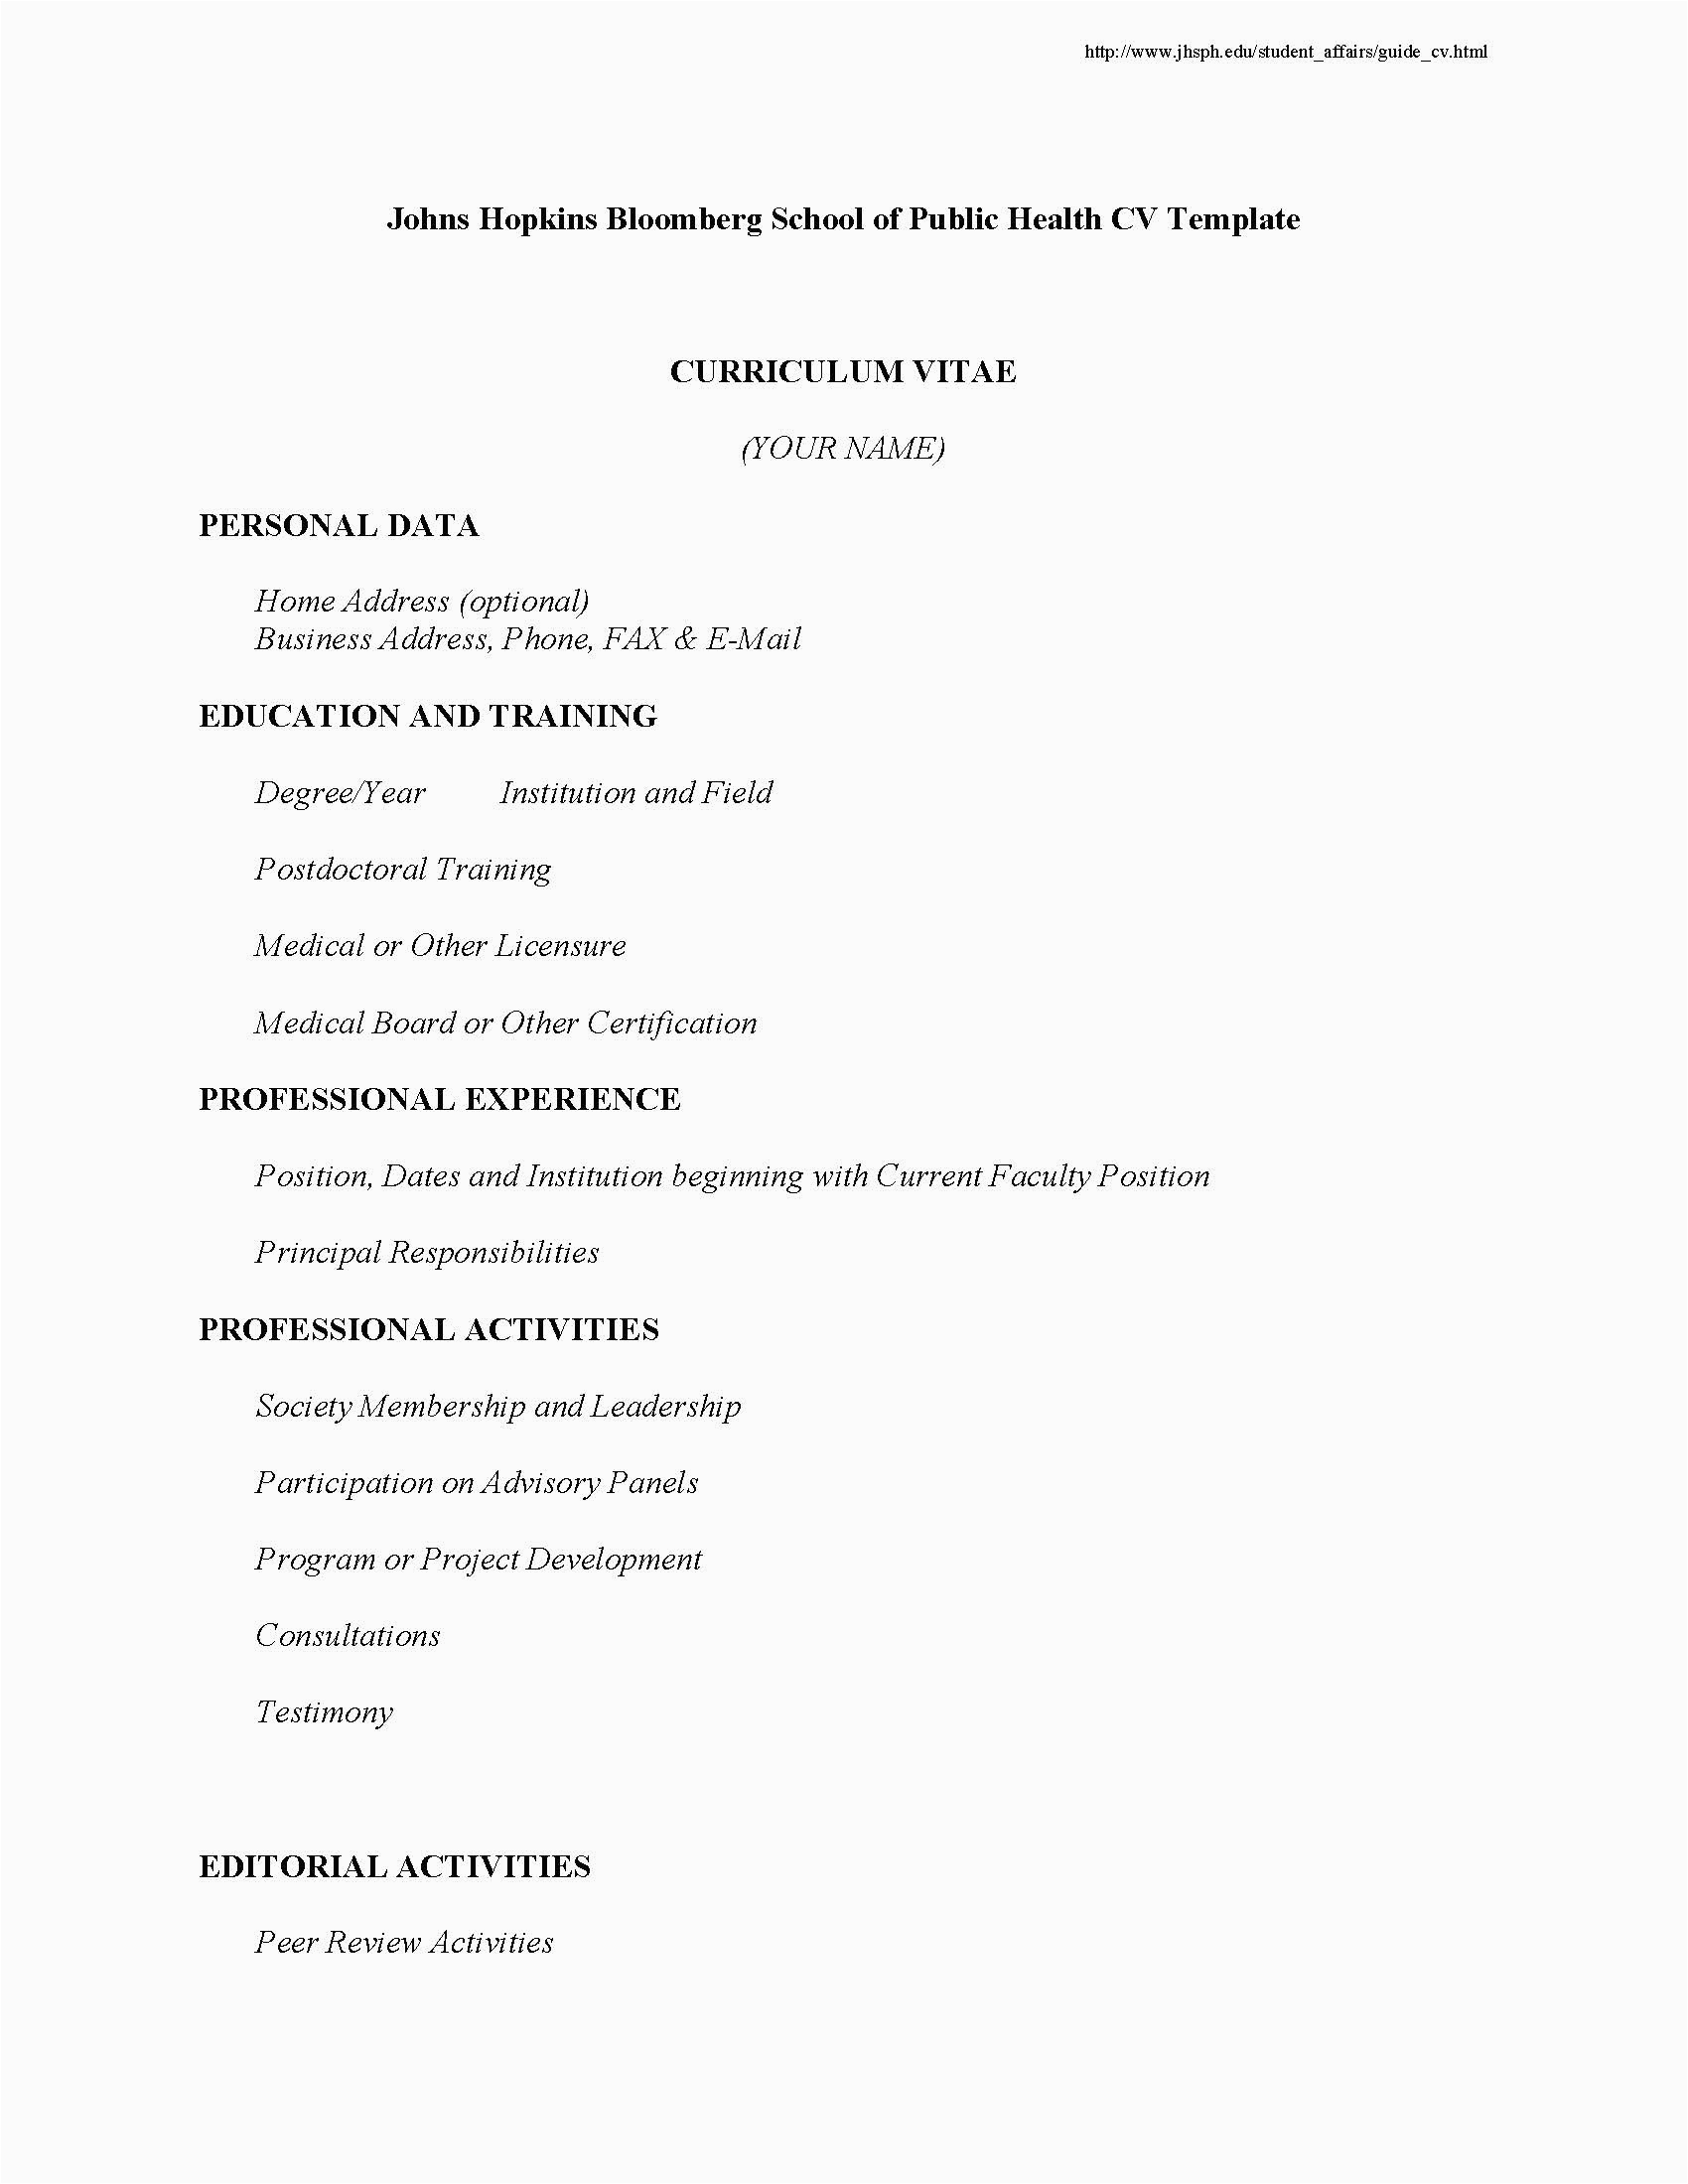 Resume Sample for Rockefeller University Job Curriculum Vitae for Students Example